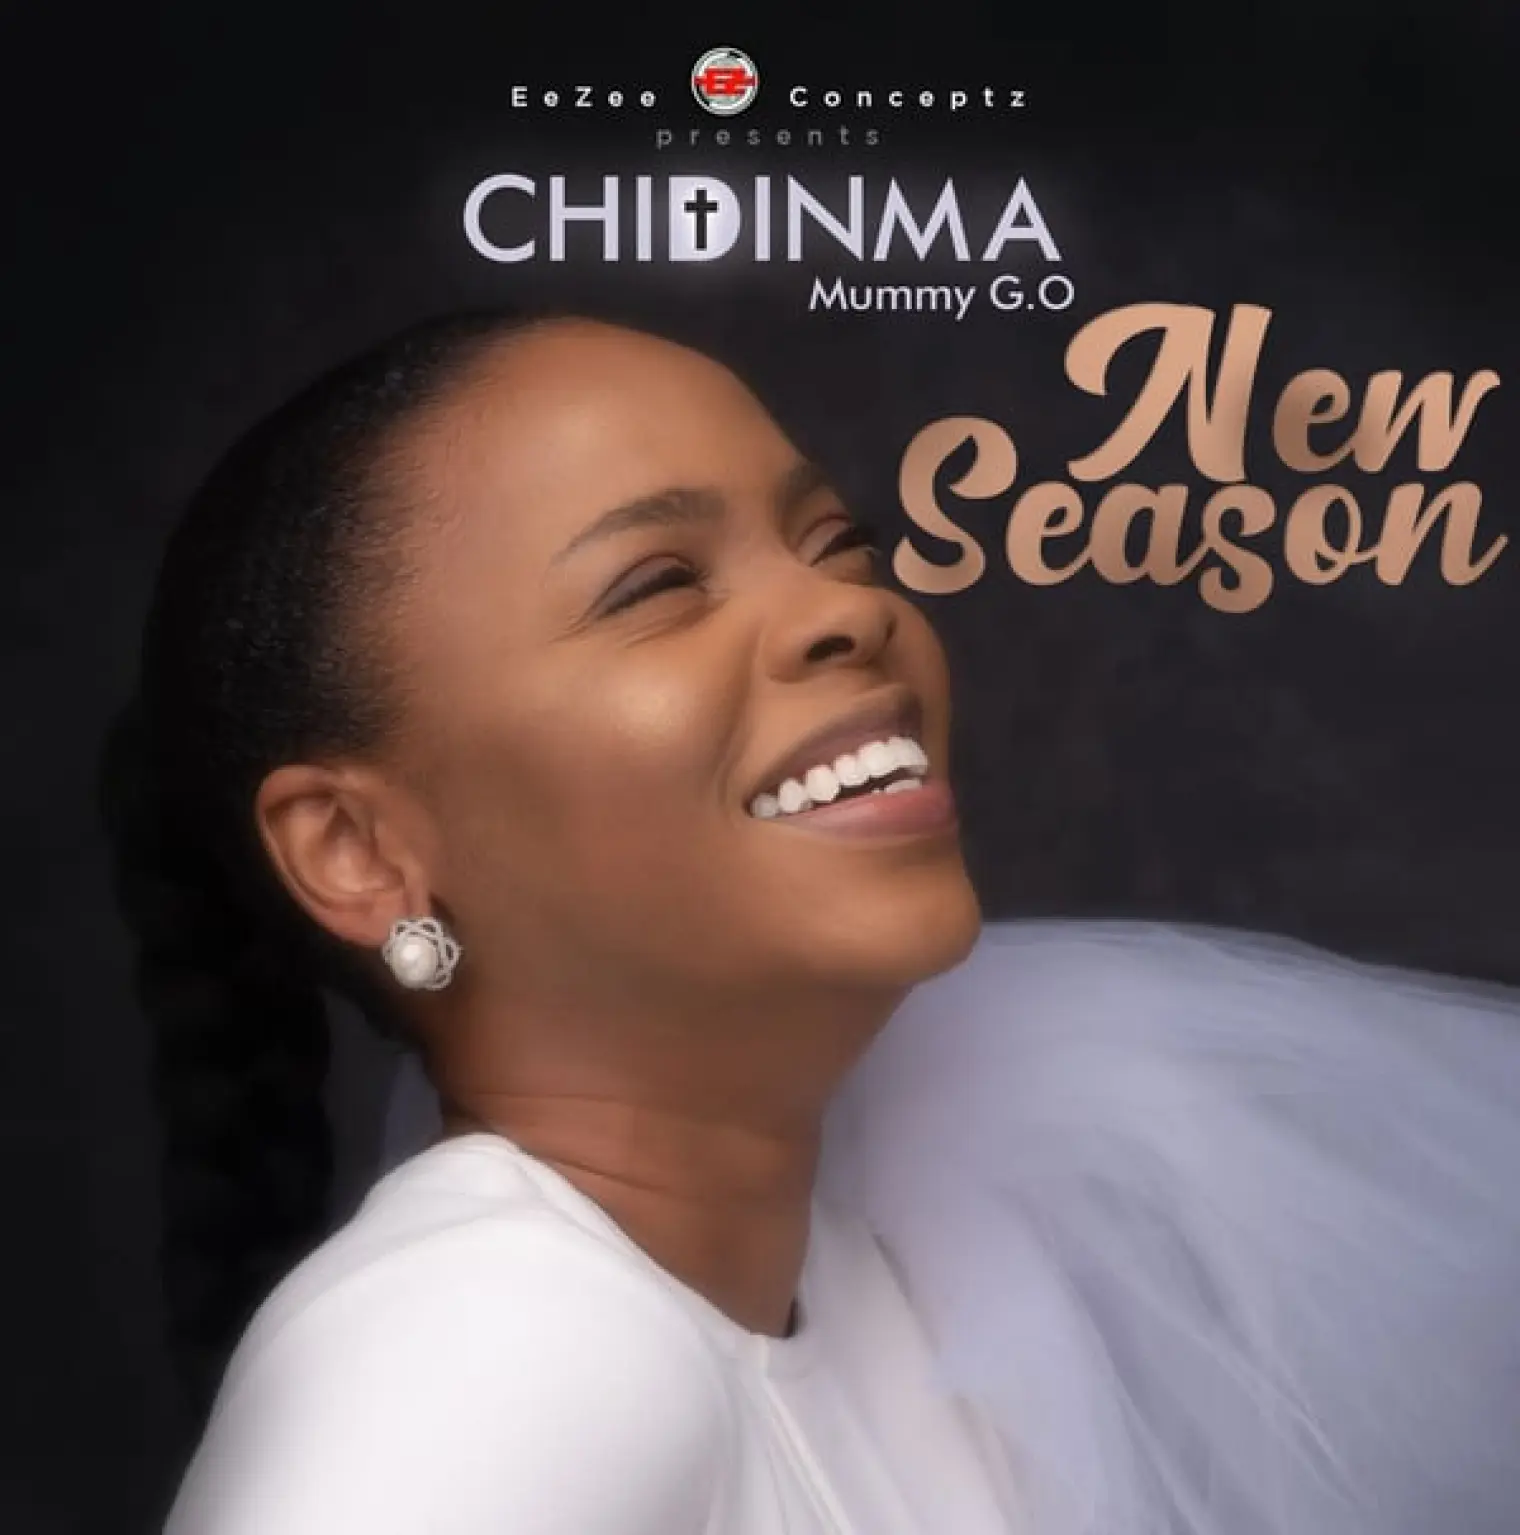 New Season -  Chidinma 